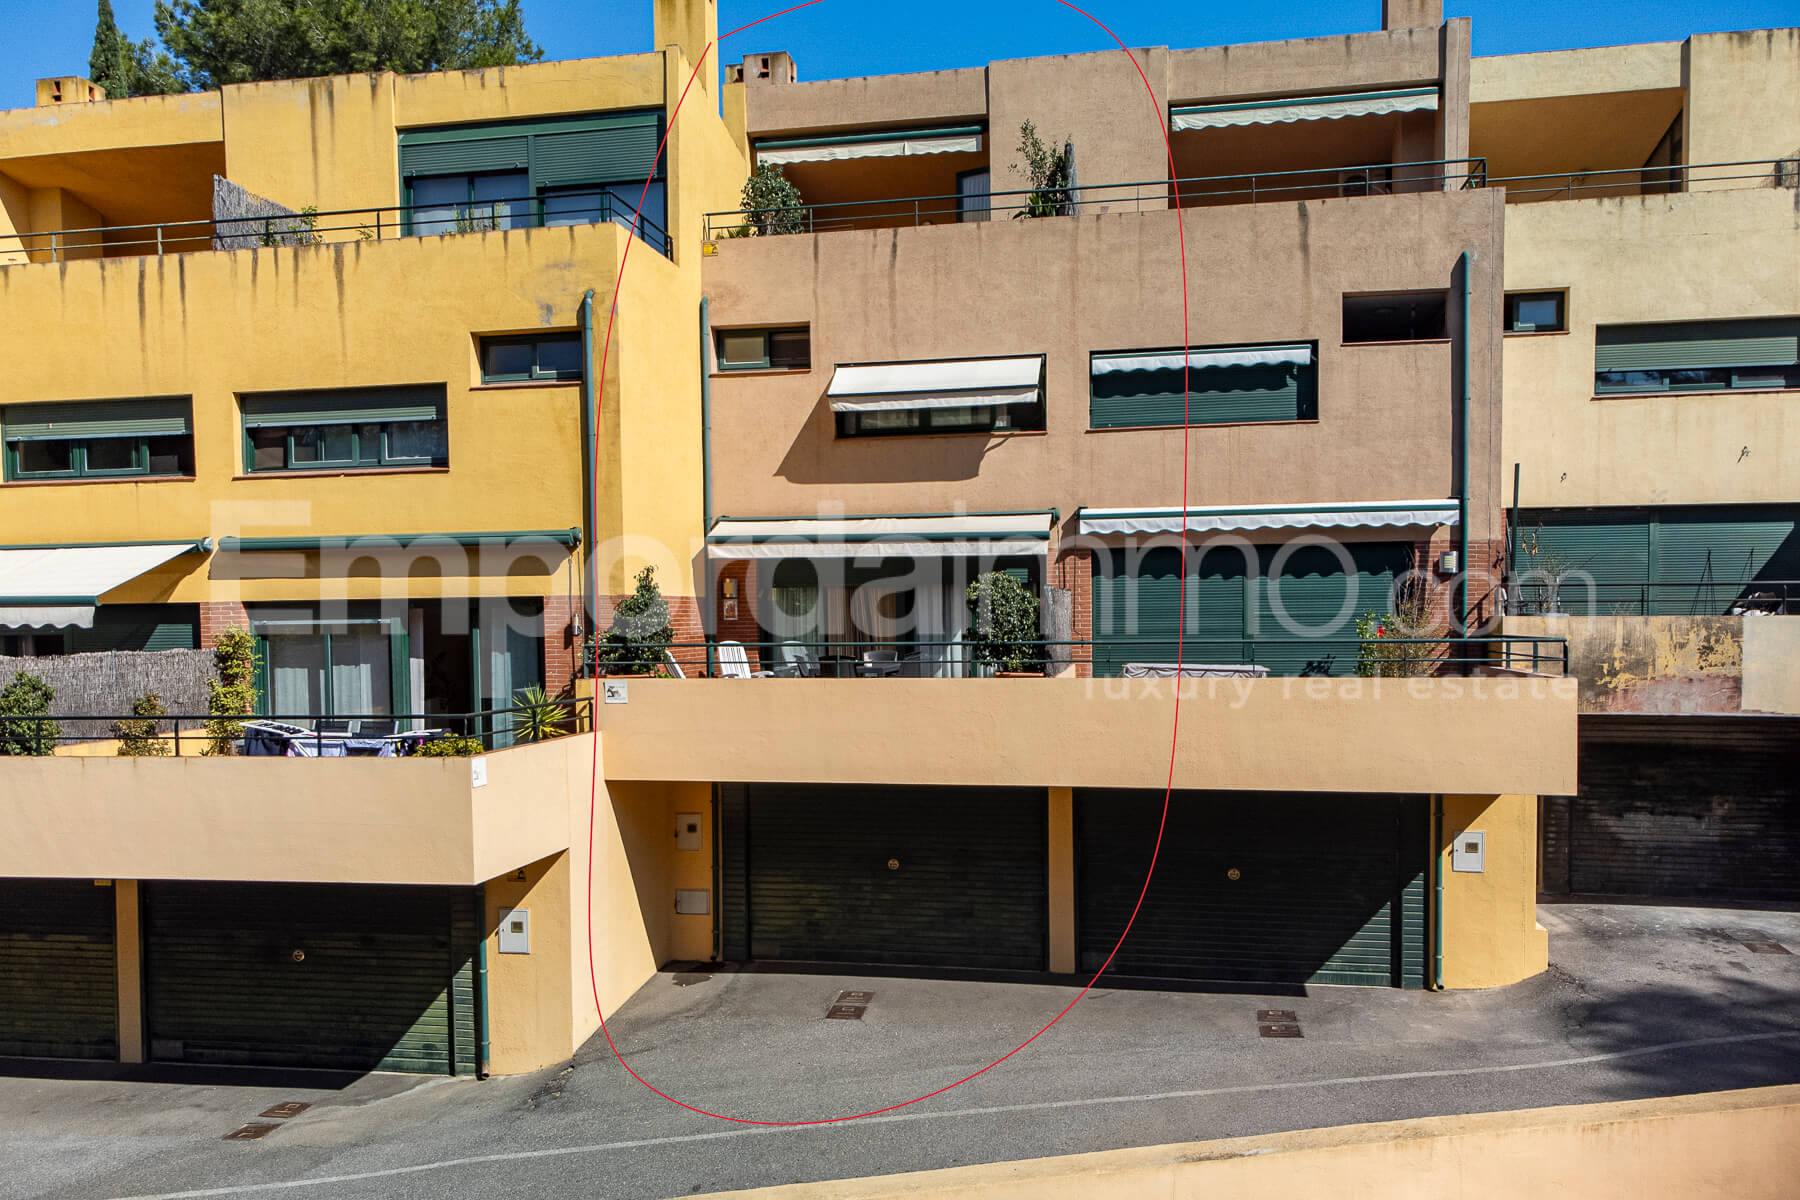 Casa en venta en Cala Tamarit - Tarragona